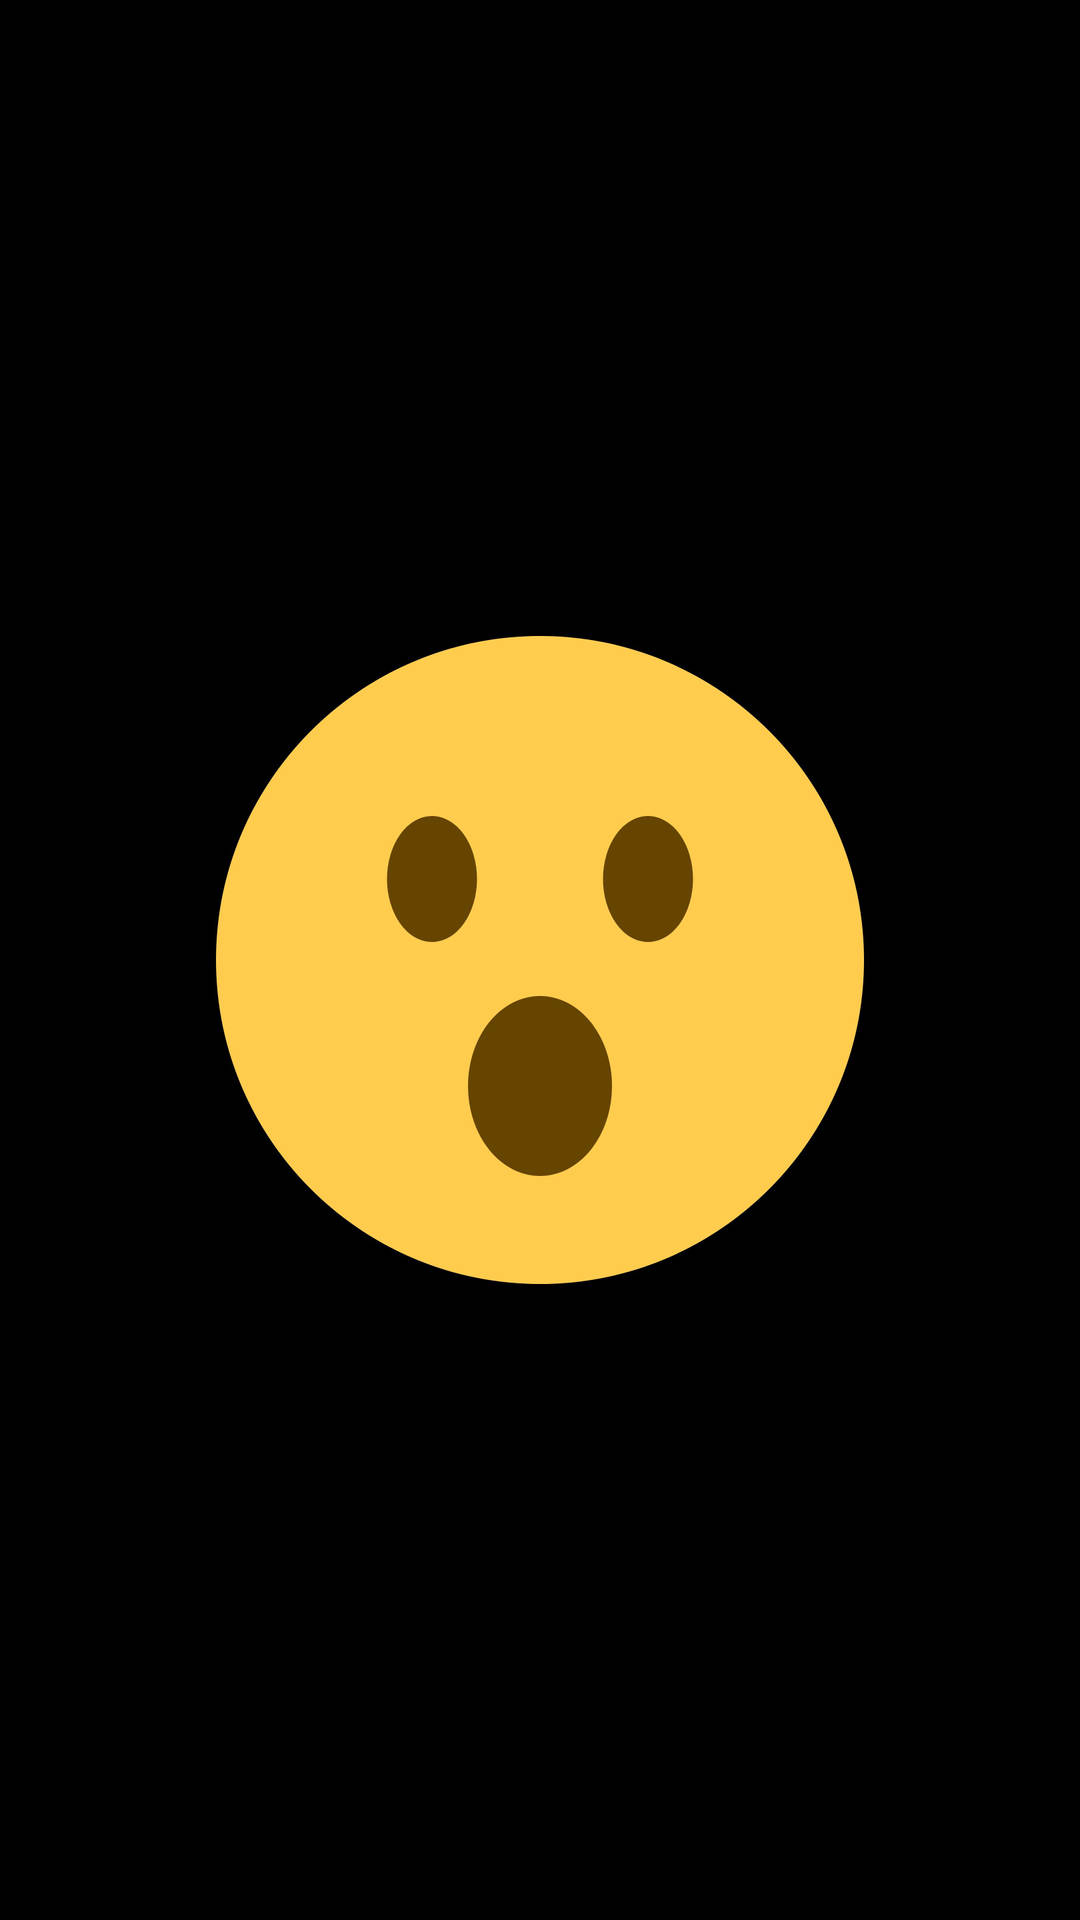 Top 999+ Emoji Wallpaper Full HD, 4K✅Free to Use